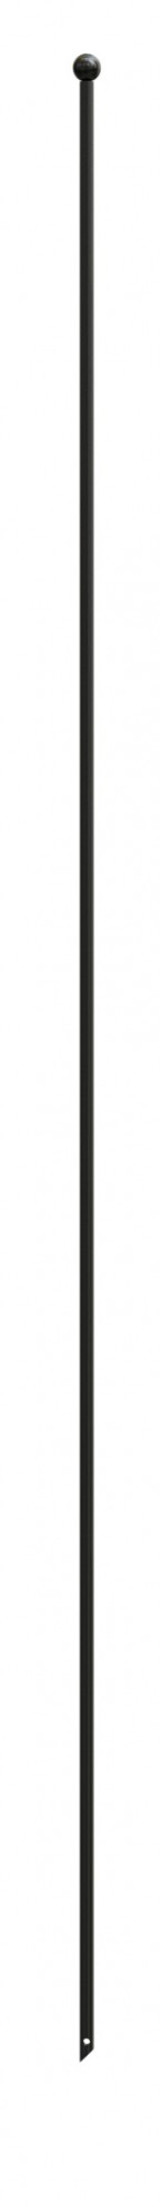 Large Multi-Purpose Grid Post Stake (140cm)